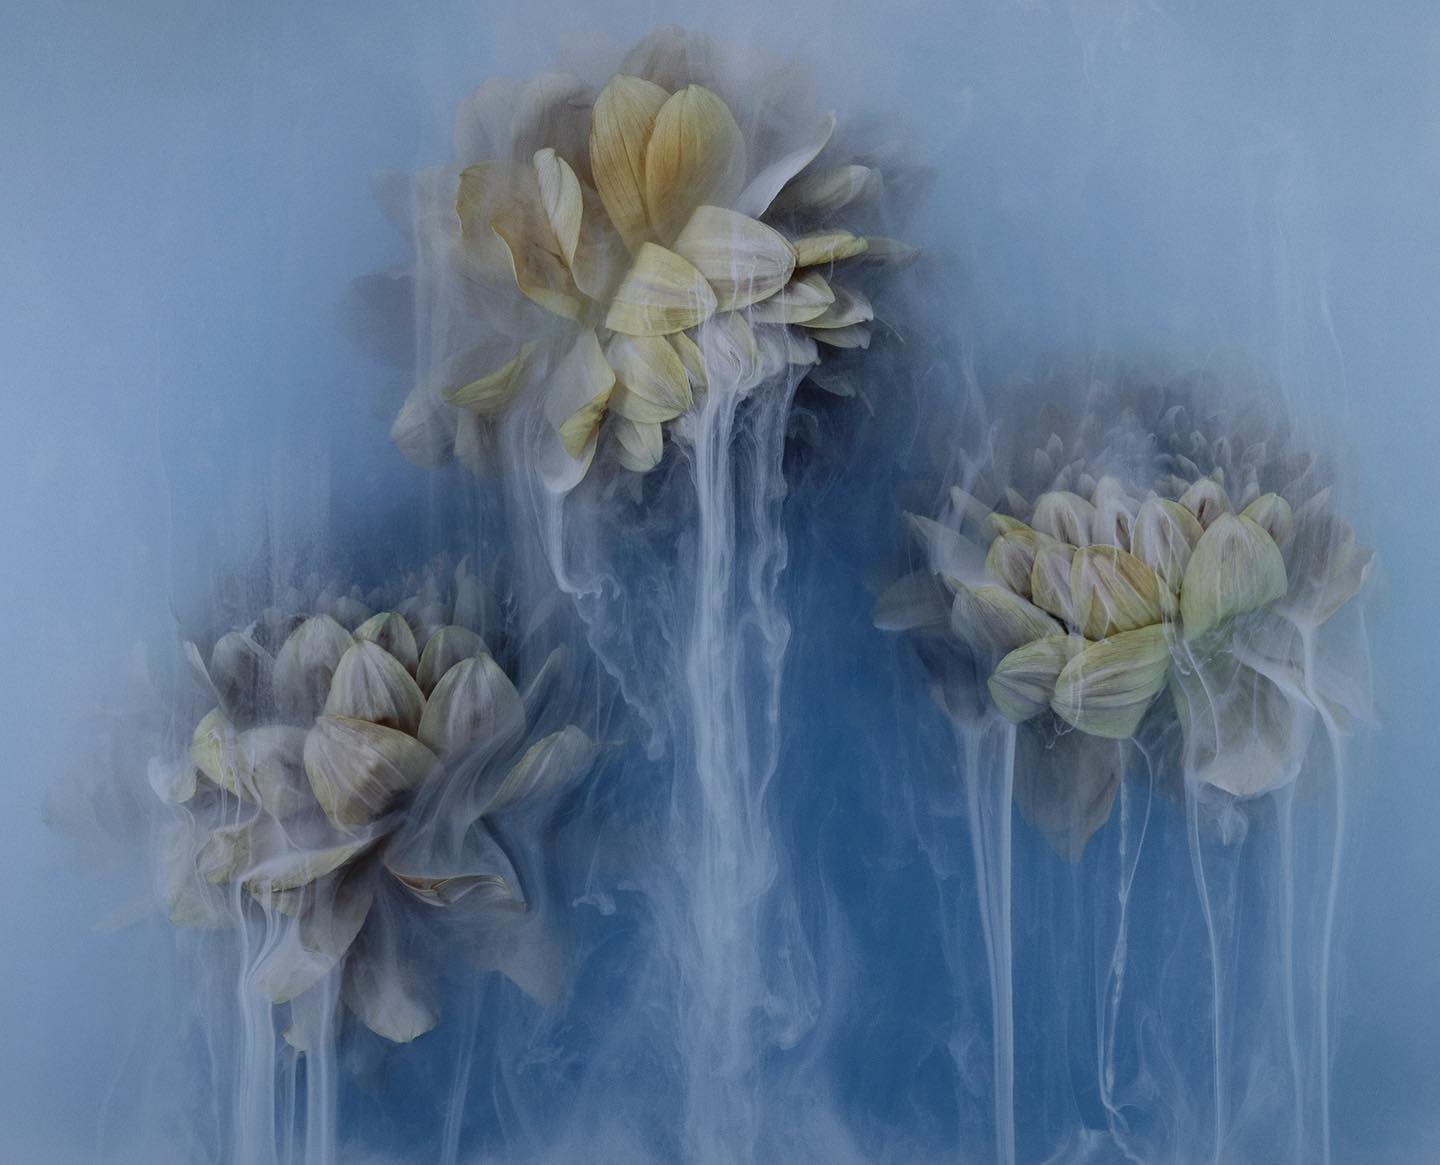 Robert Peek Photography - chrysanths - on thursd